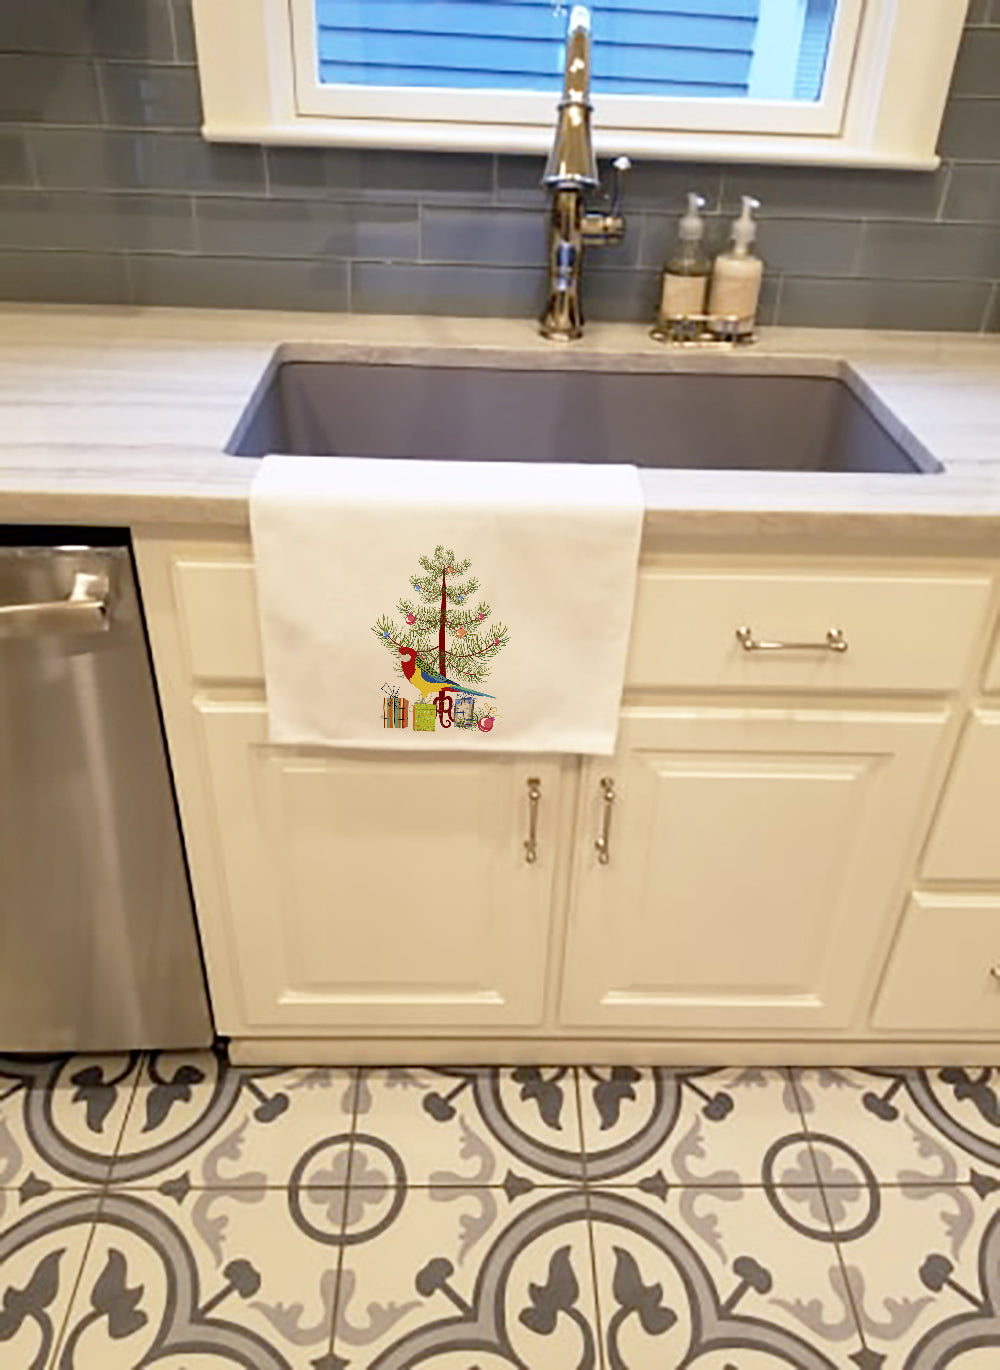 Buy this Rosella Merry Christmas White Kitchen Towel Set of 2